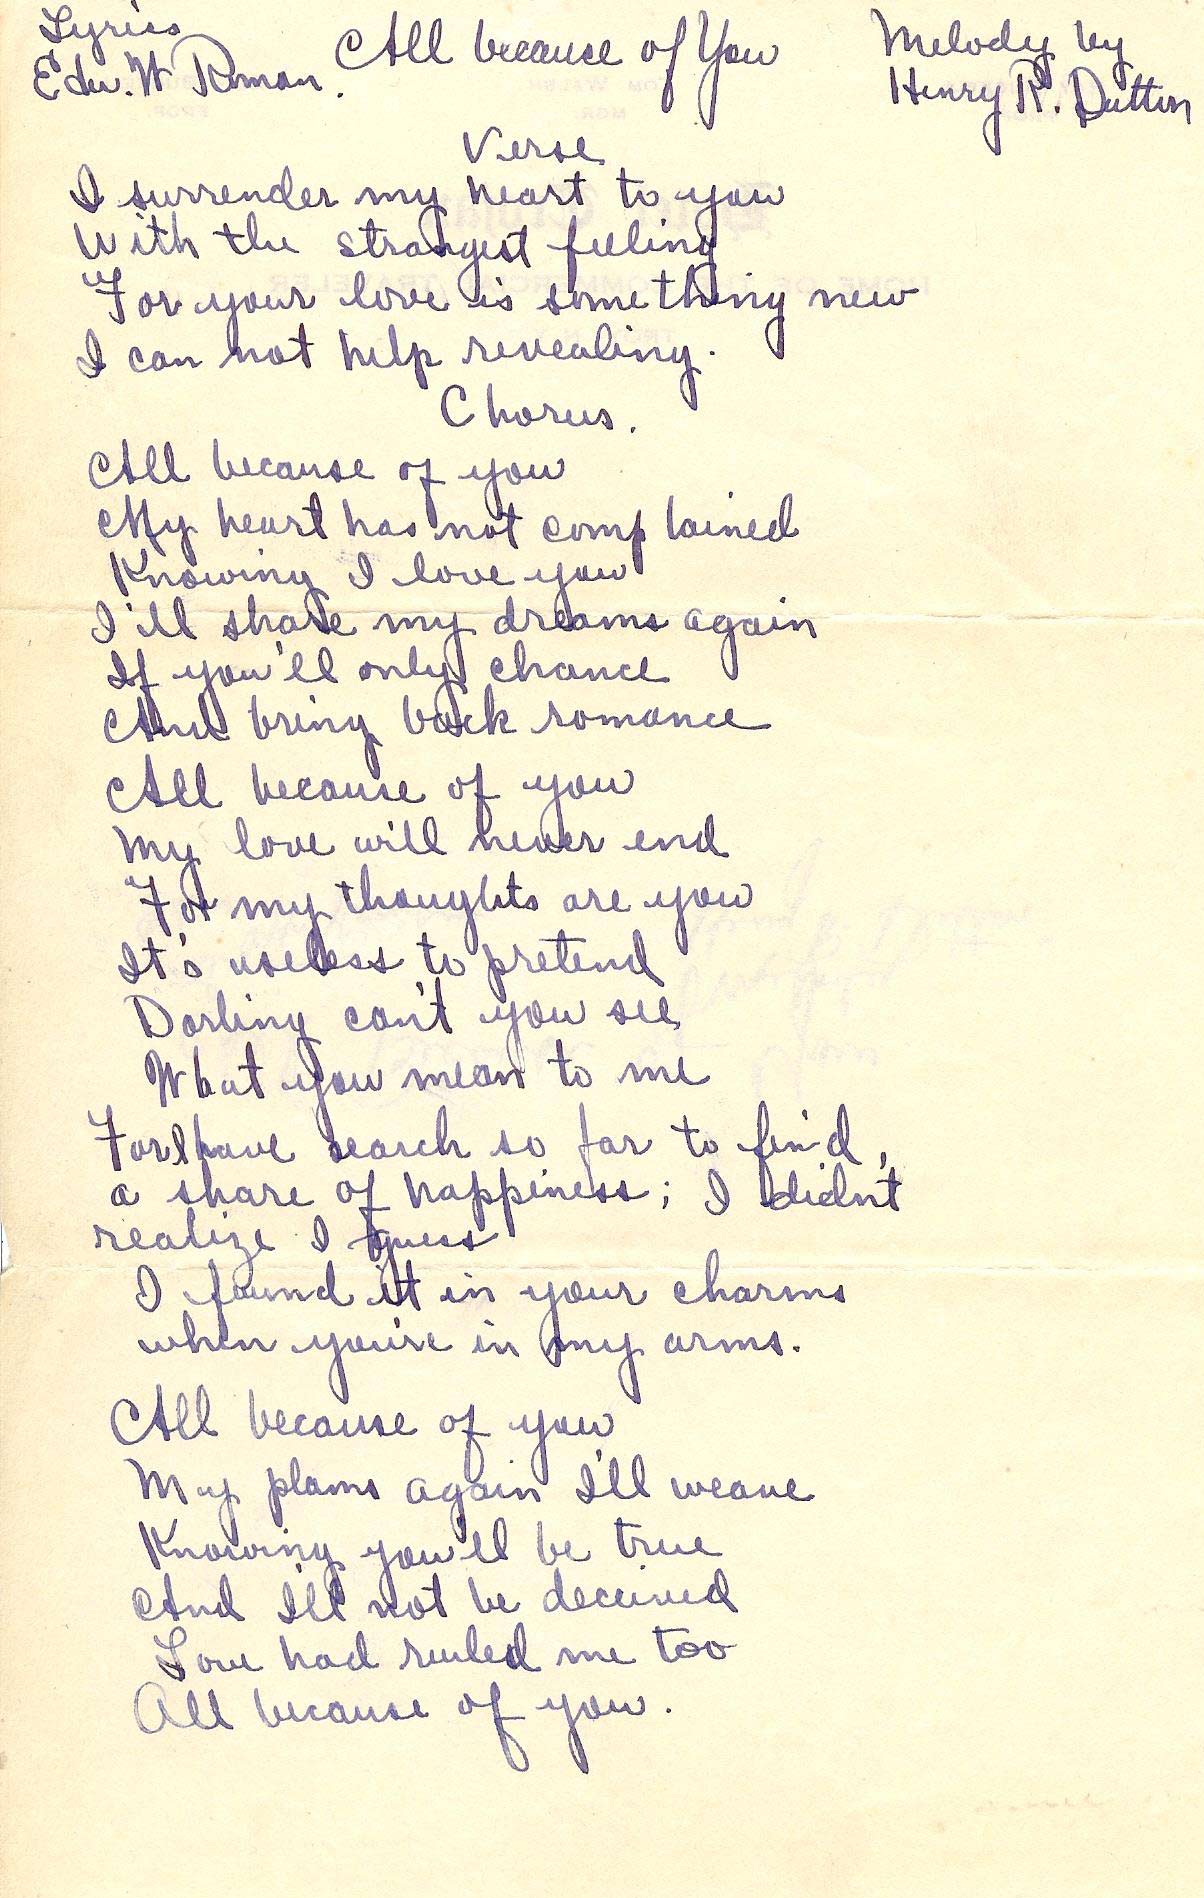 Lyrics to "All Because of You", 1936.